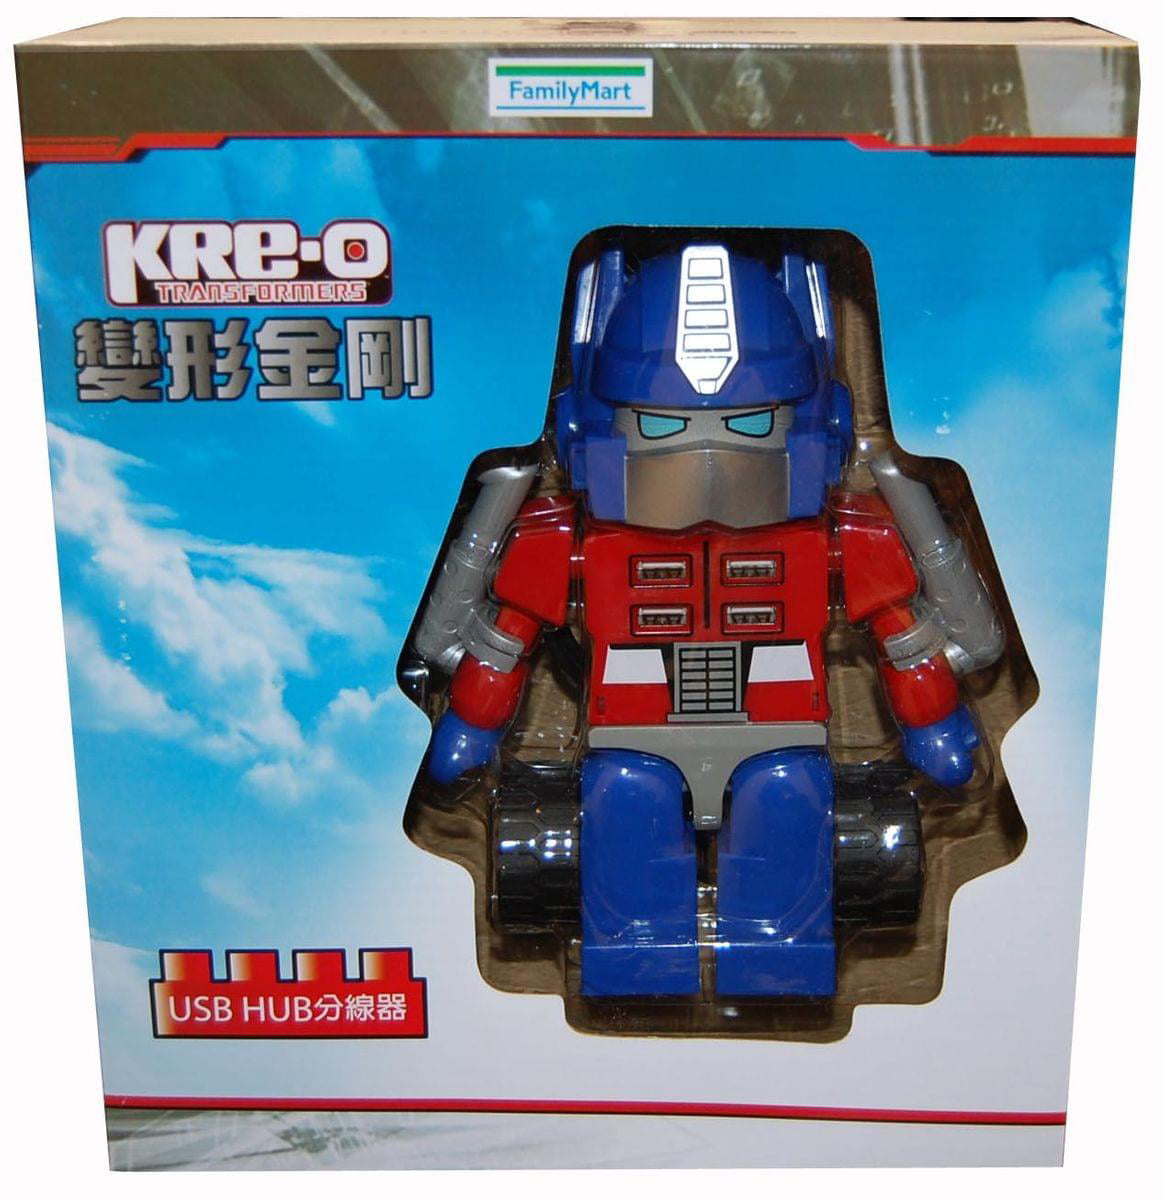 kreo transformers optimus prime